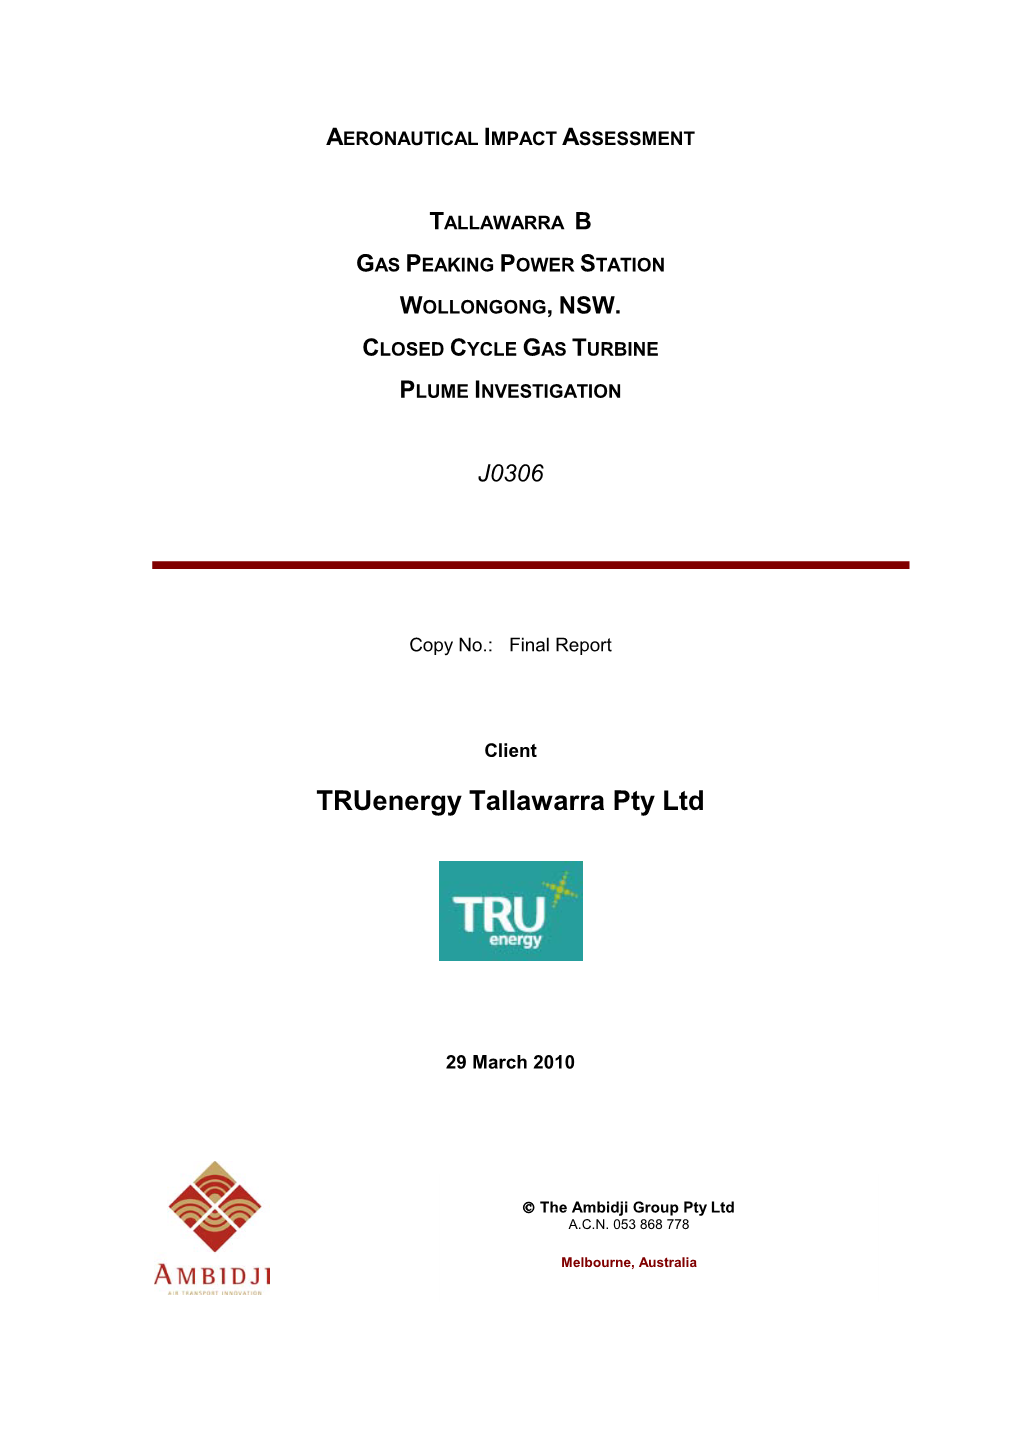 Truenergy Tallawarra Pty Ltd